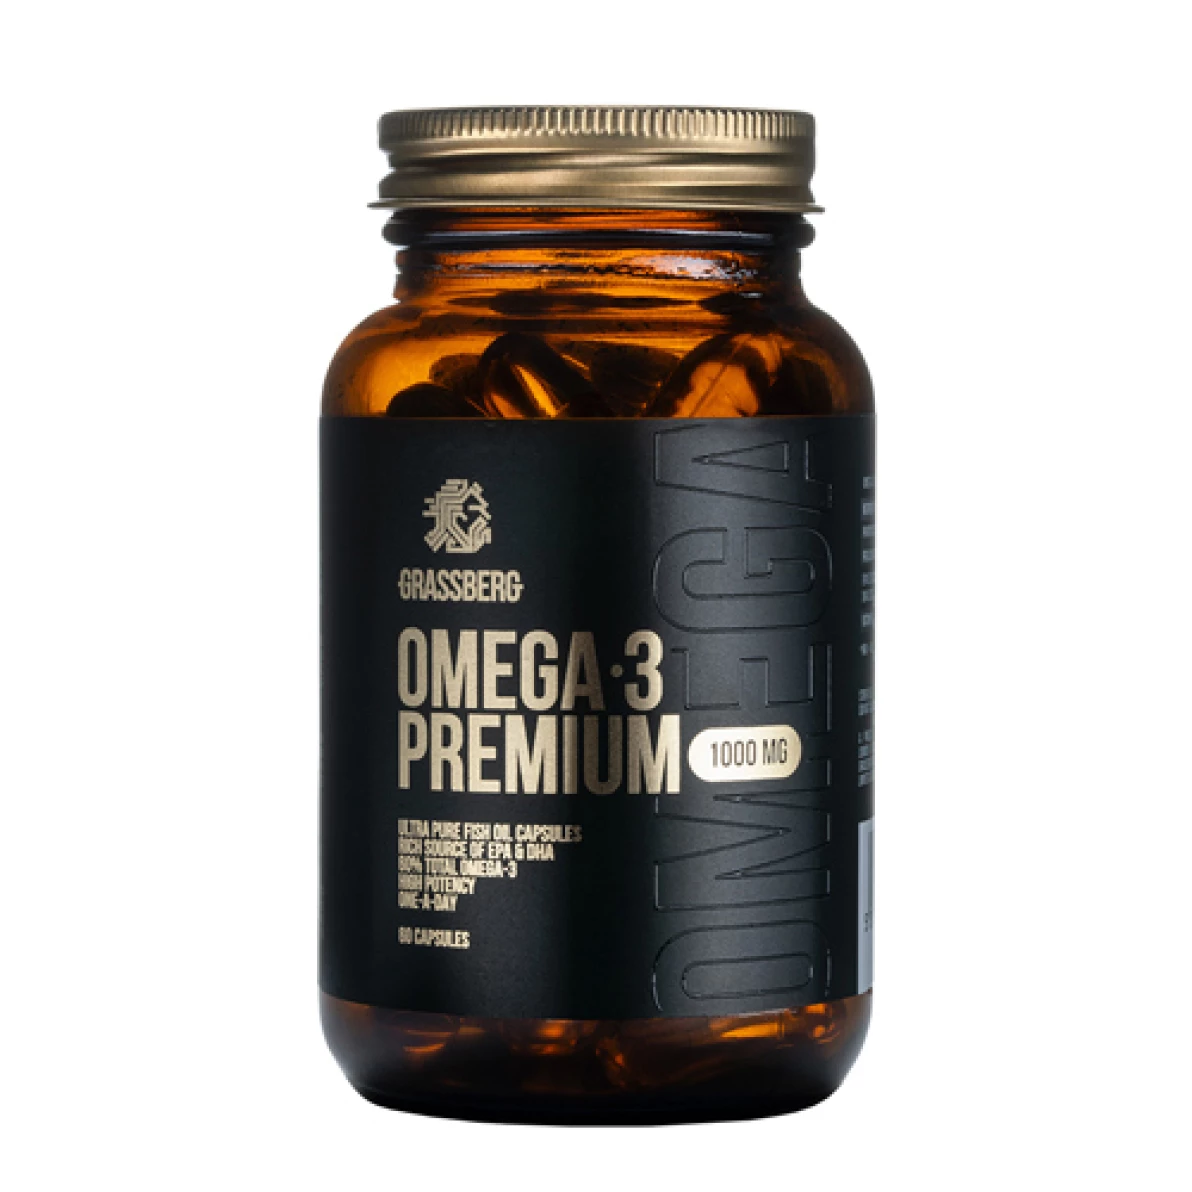 Omega 3 "Premium" 55% Grassberg 60 шт.